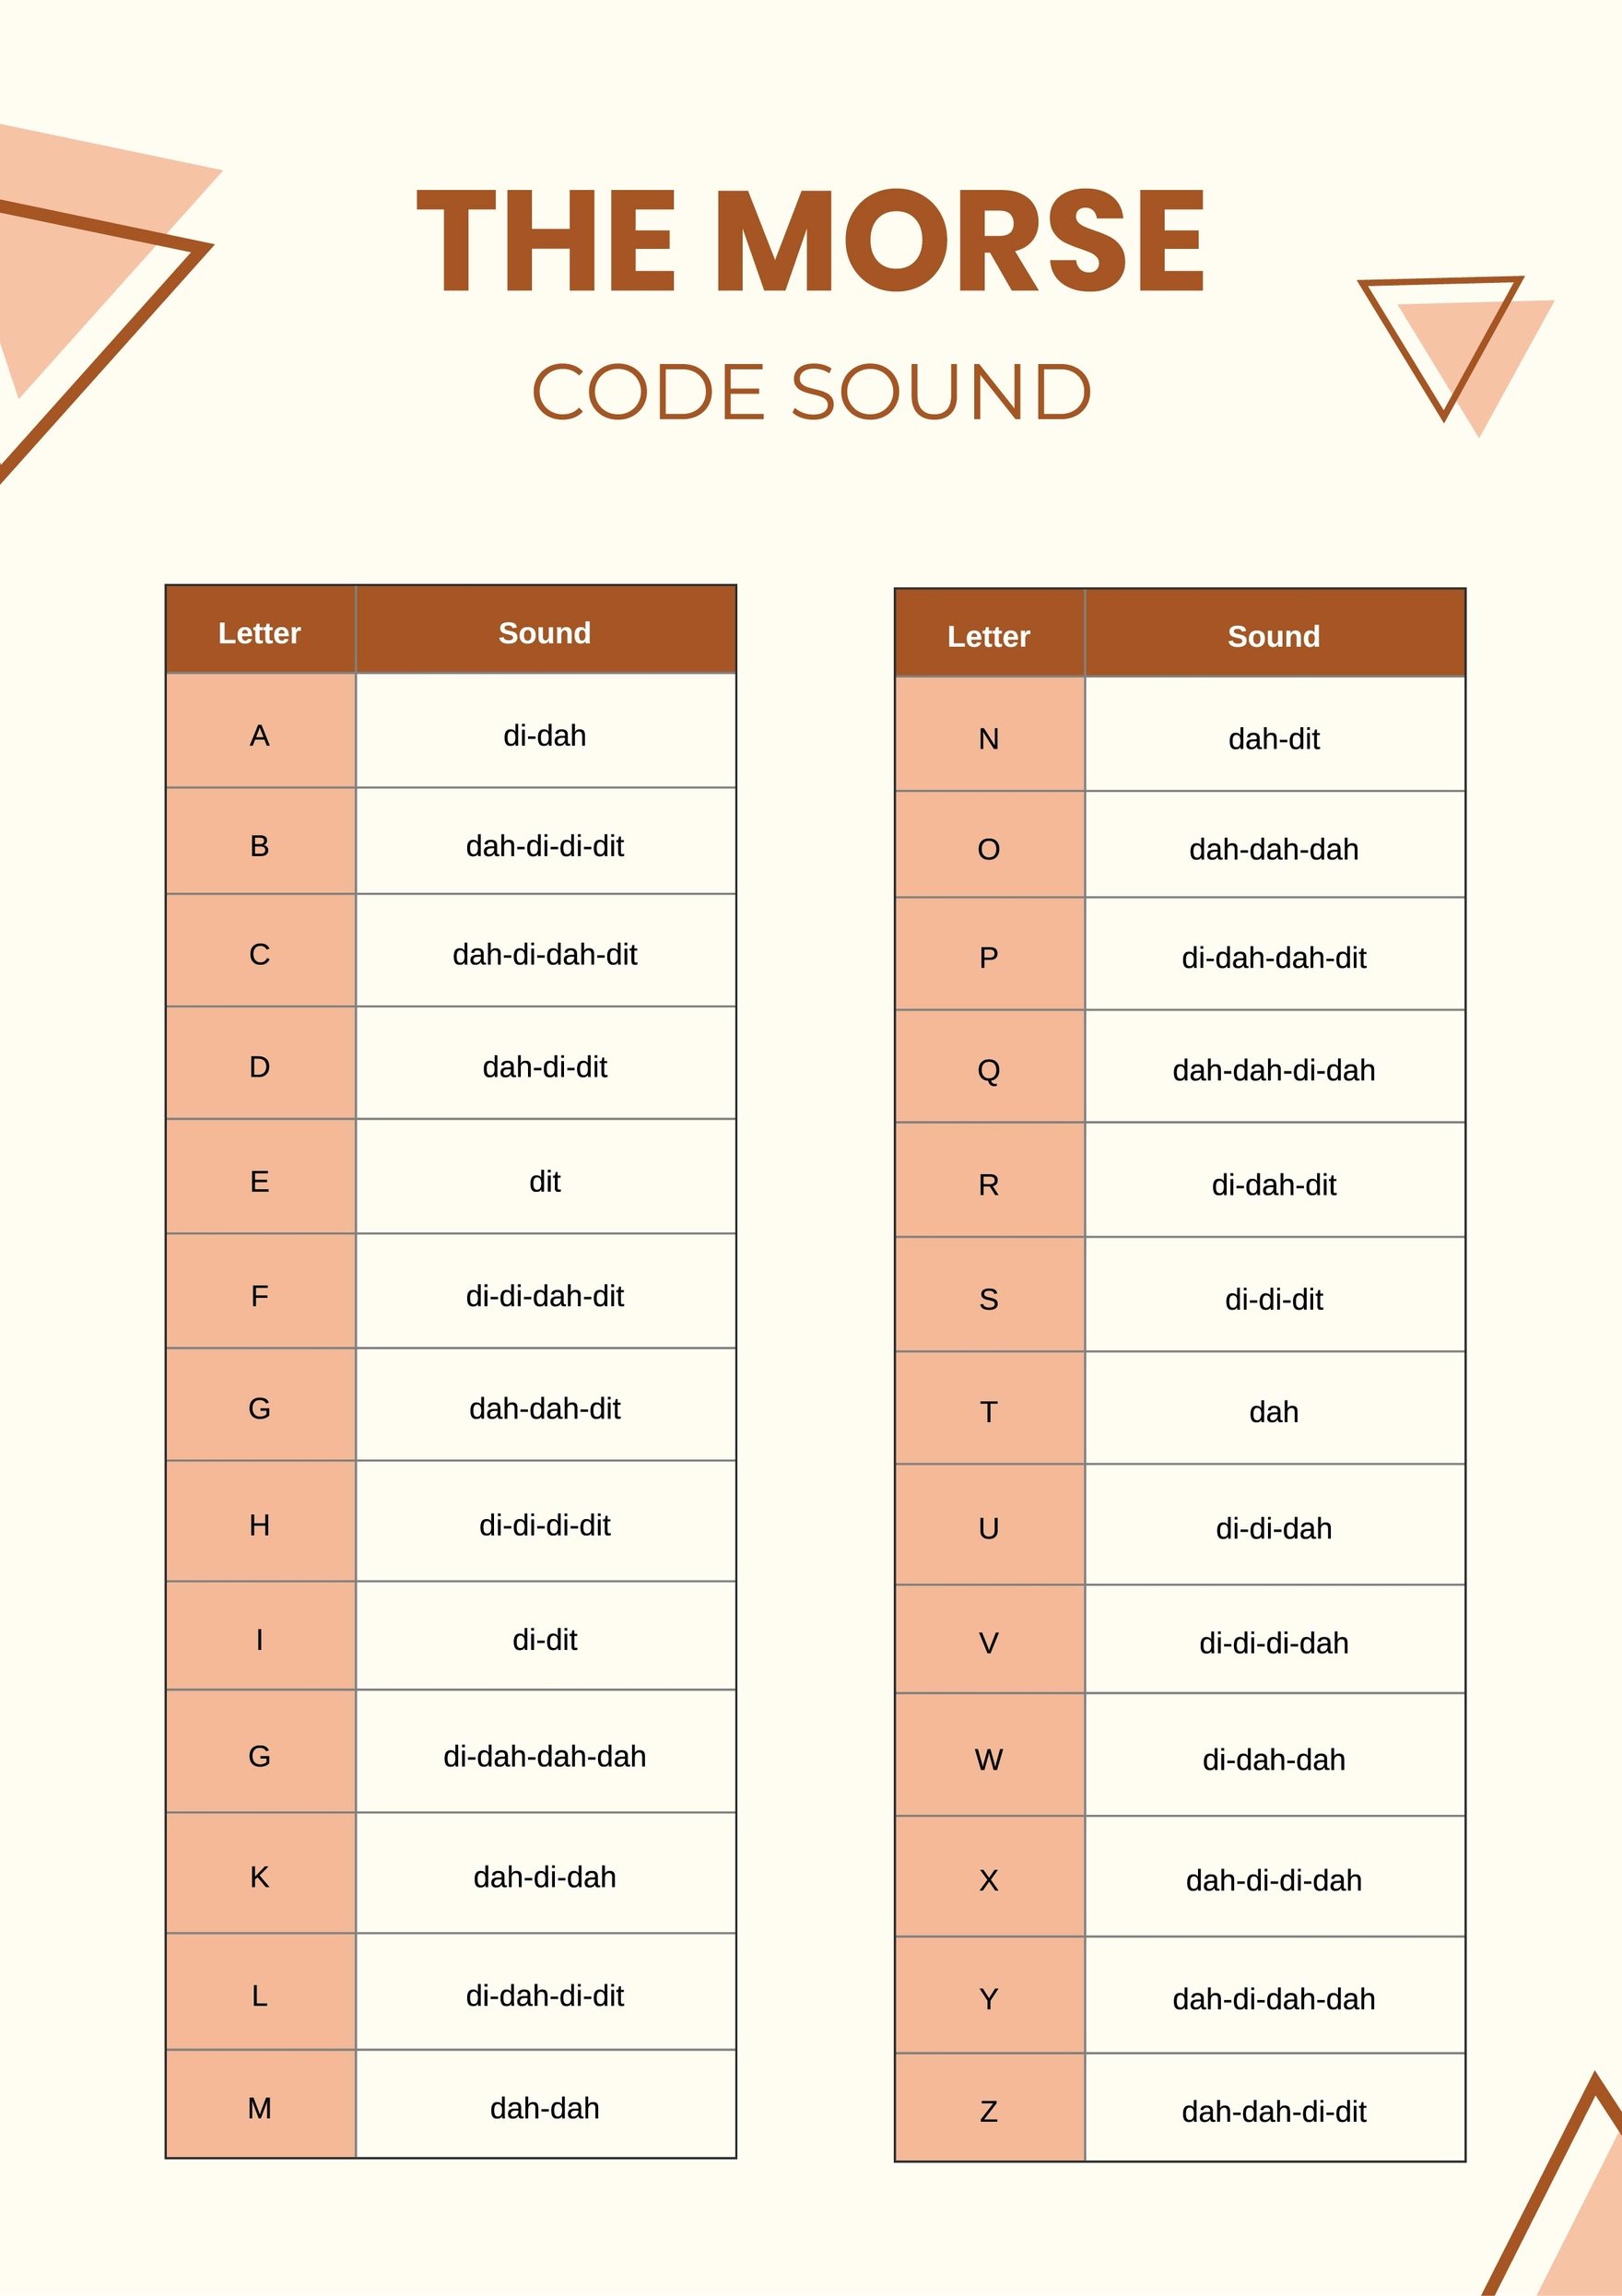 Free Morse Code Sound Chart in PDF, Illustrator